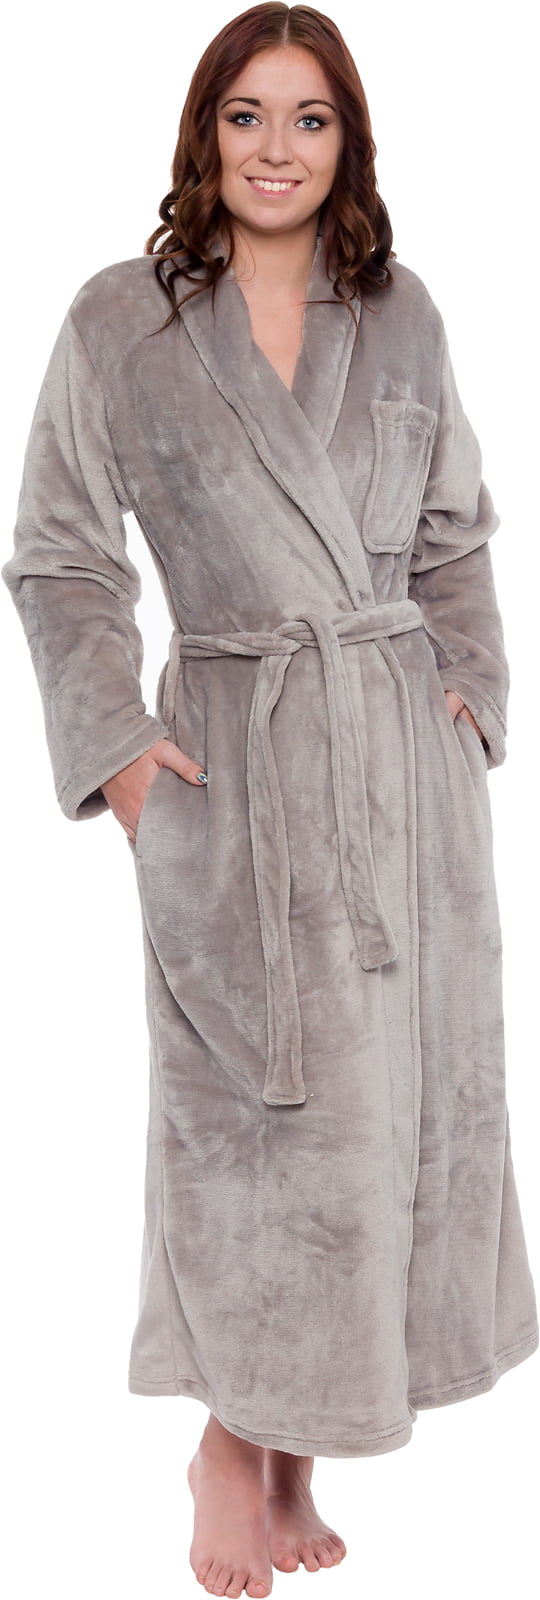 Photo 1 of Silver Lilly Women's Full Length Luxury Long Bathrobe - Soft Plush Comfy Long Robe (Sizes Small - Plus Size XXL)